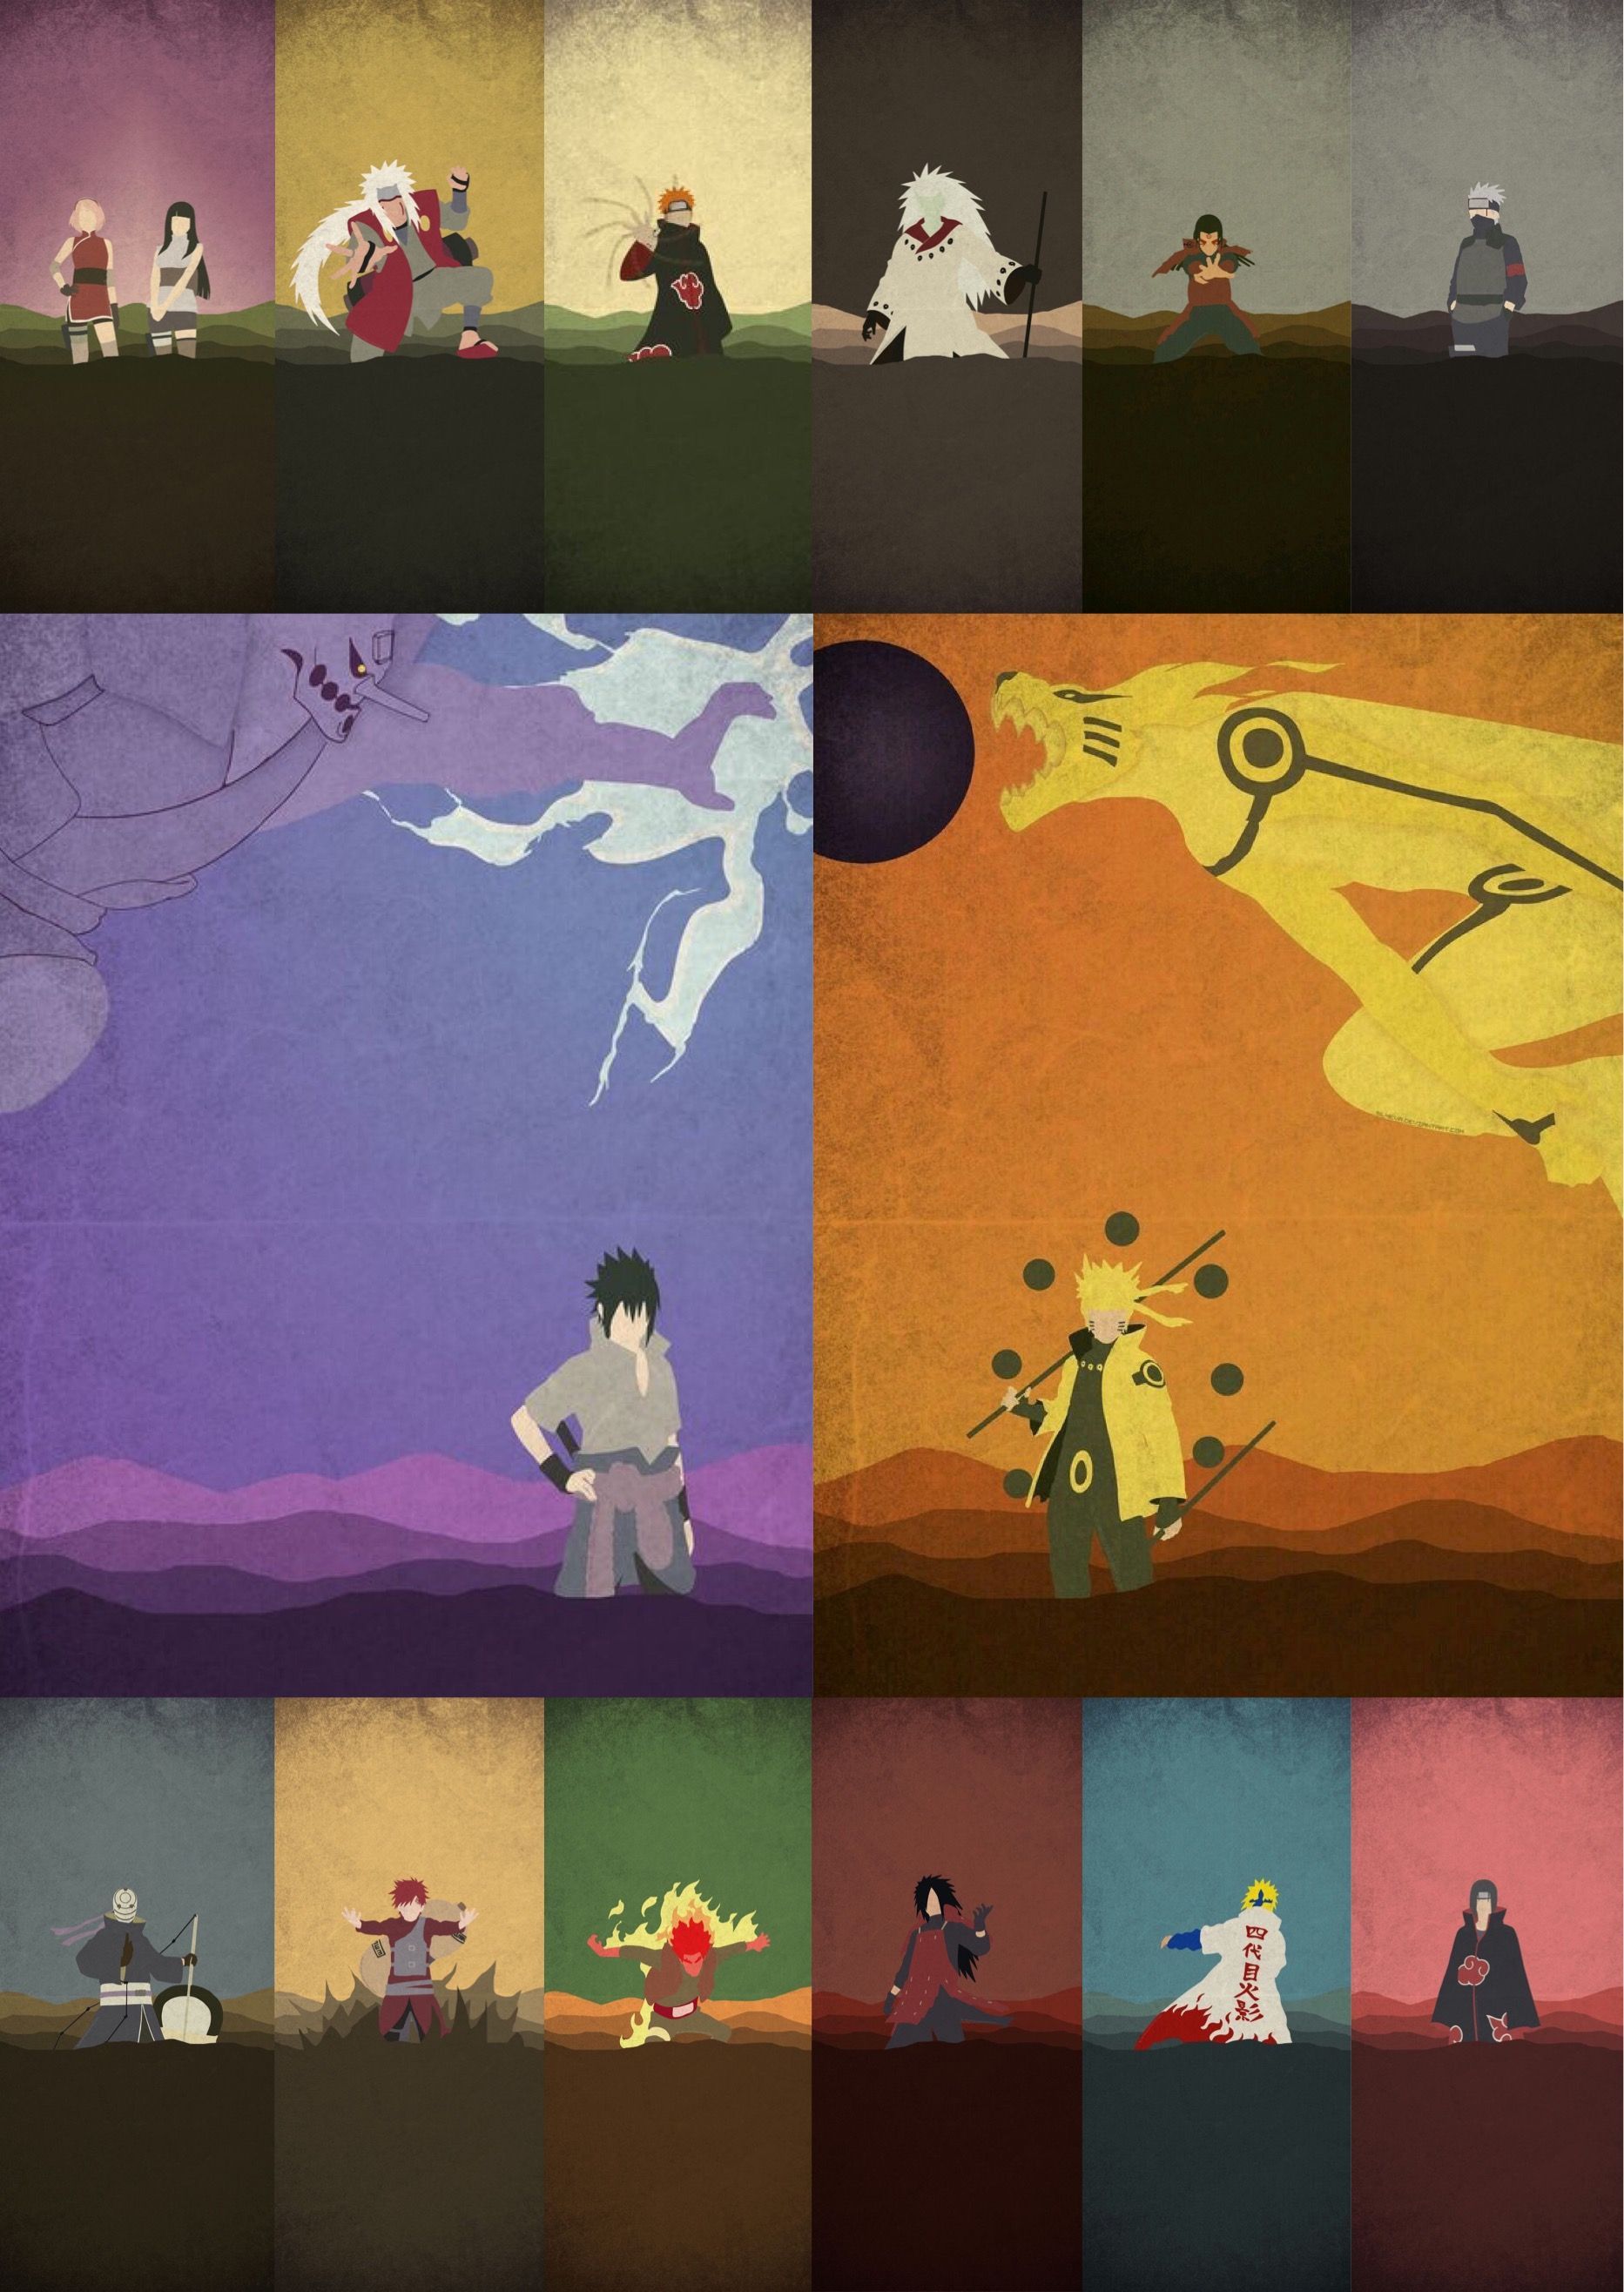 Best Mobile wallpaper image. Naruto wallpaper, Anime naruto